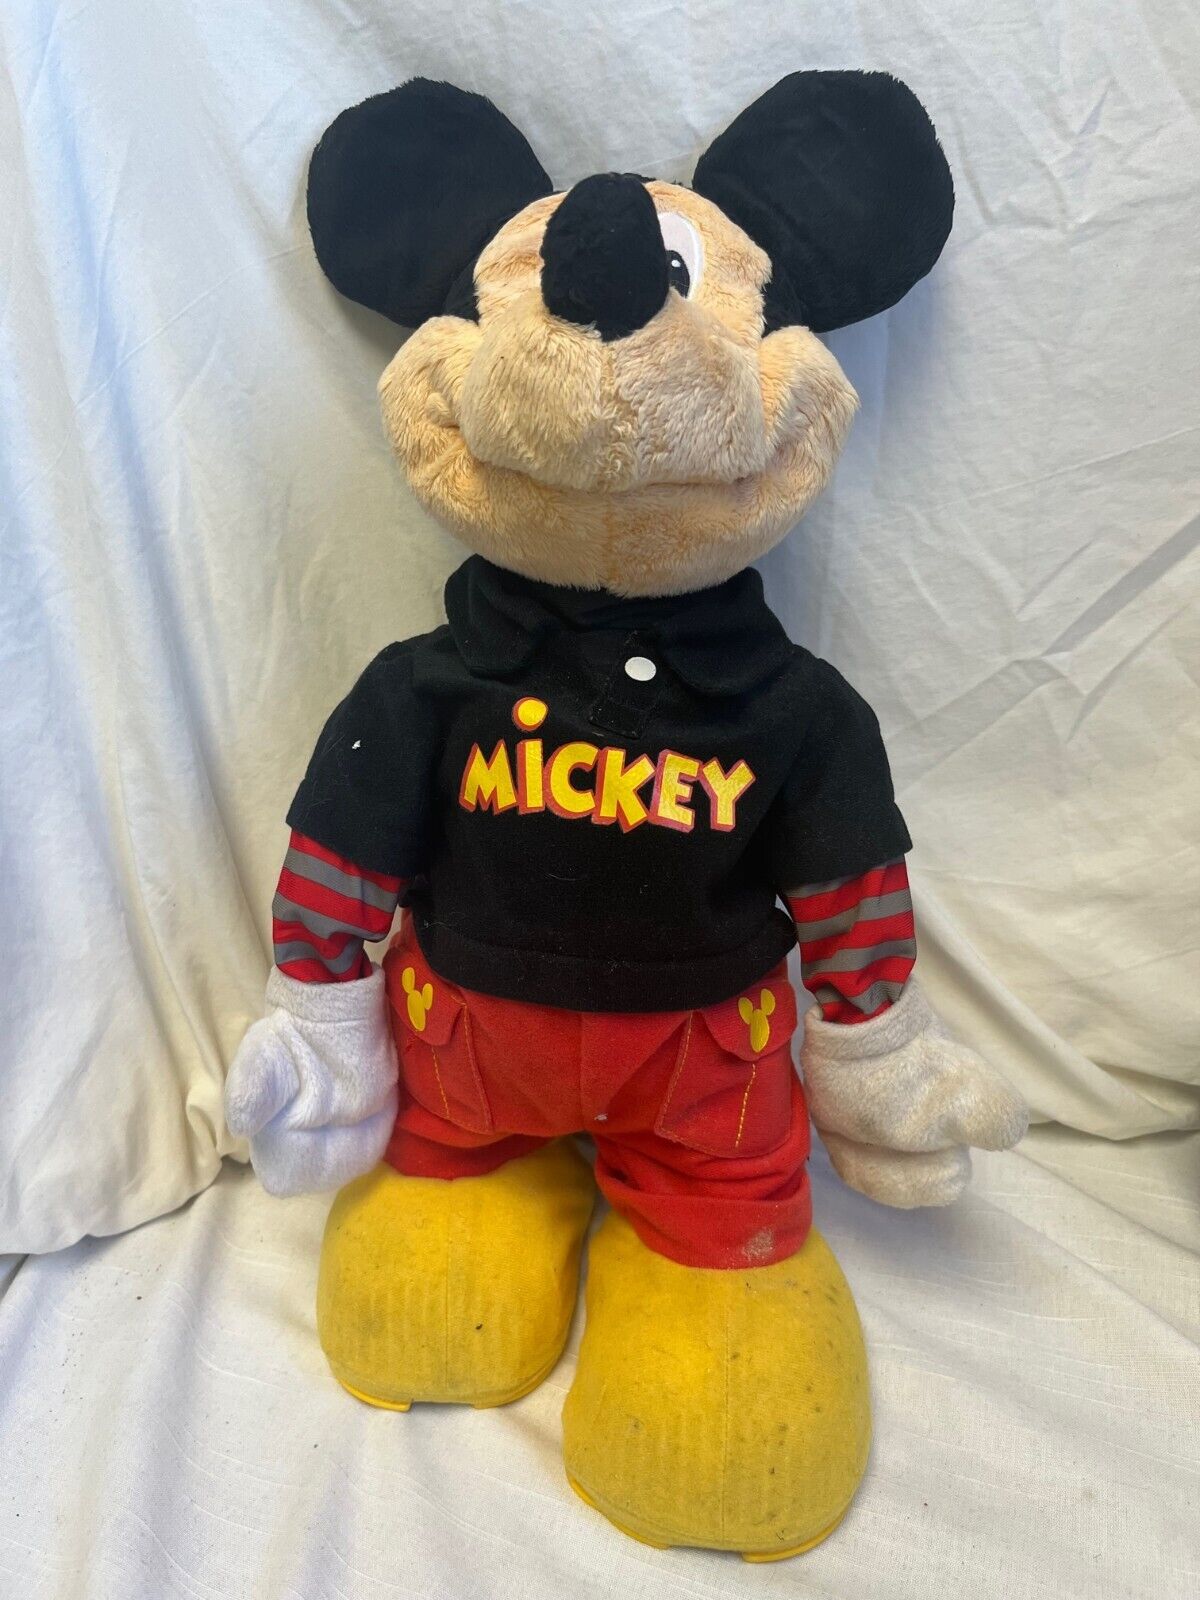 2009 Mattel Dance Star Disney Mickey Mouse Interactive Dancing Singing